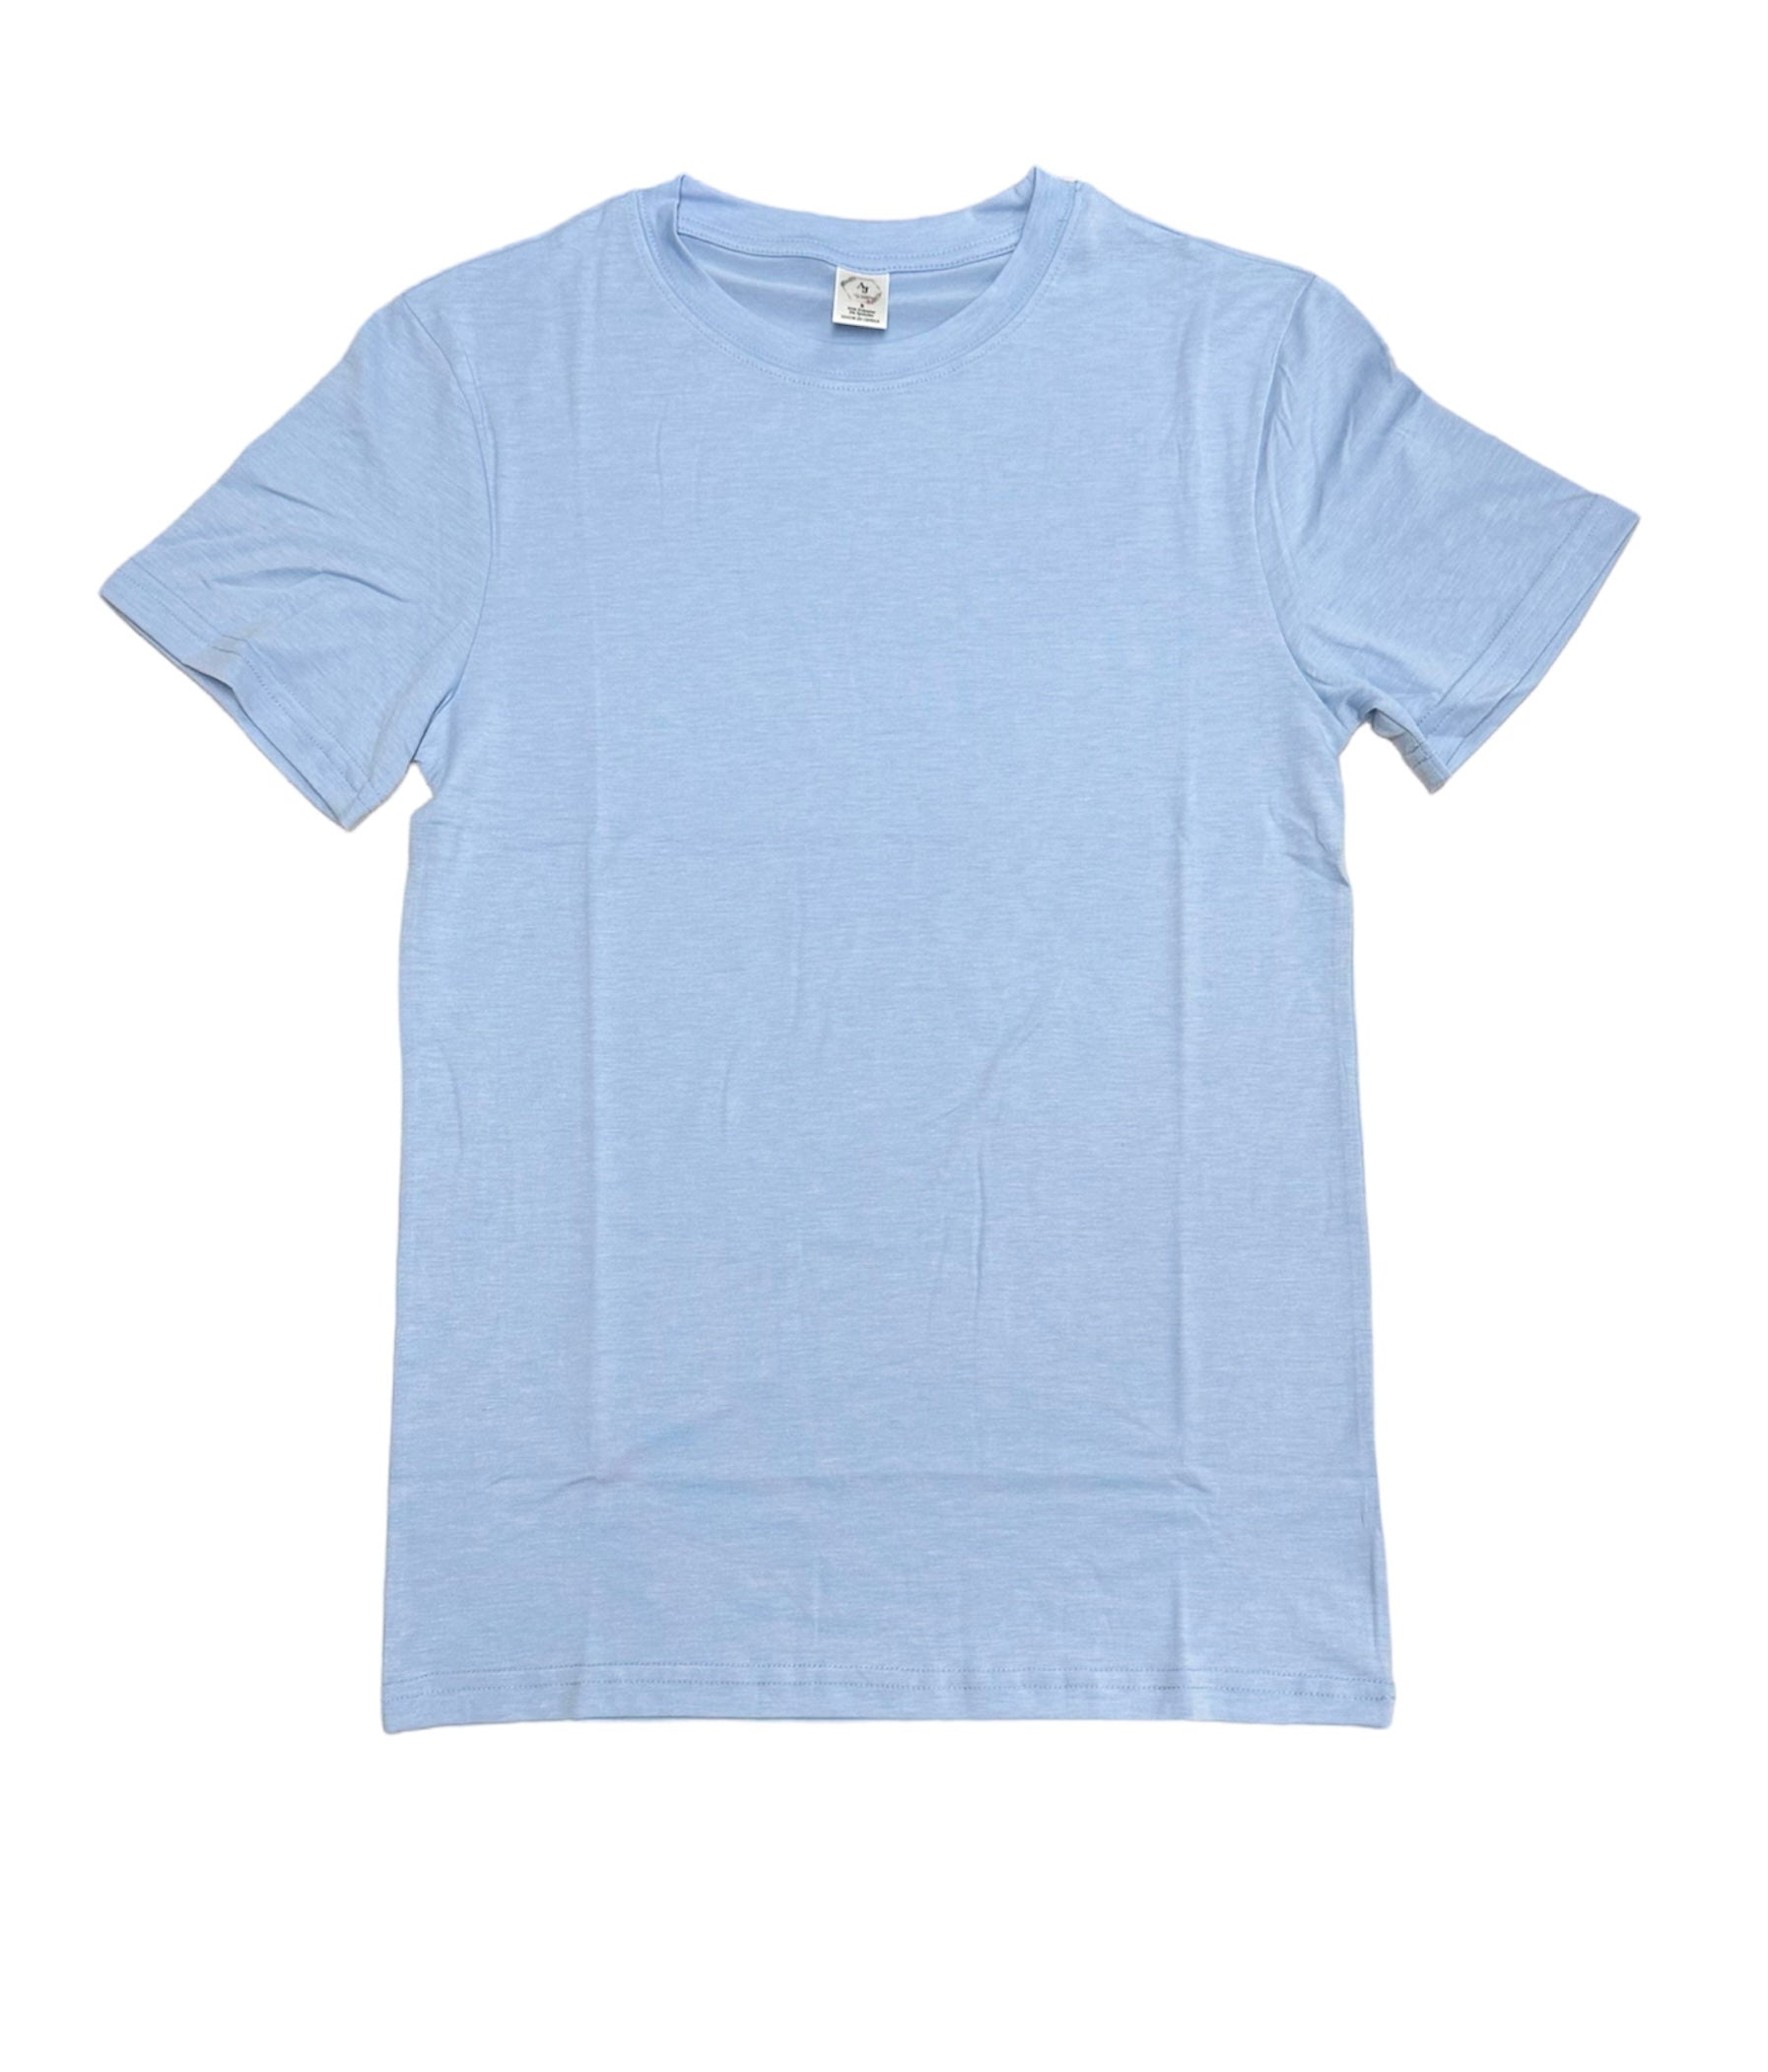 Spring Solid Adult Unisex Shirt – Ava Jane's Blanks